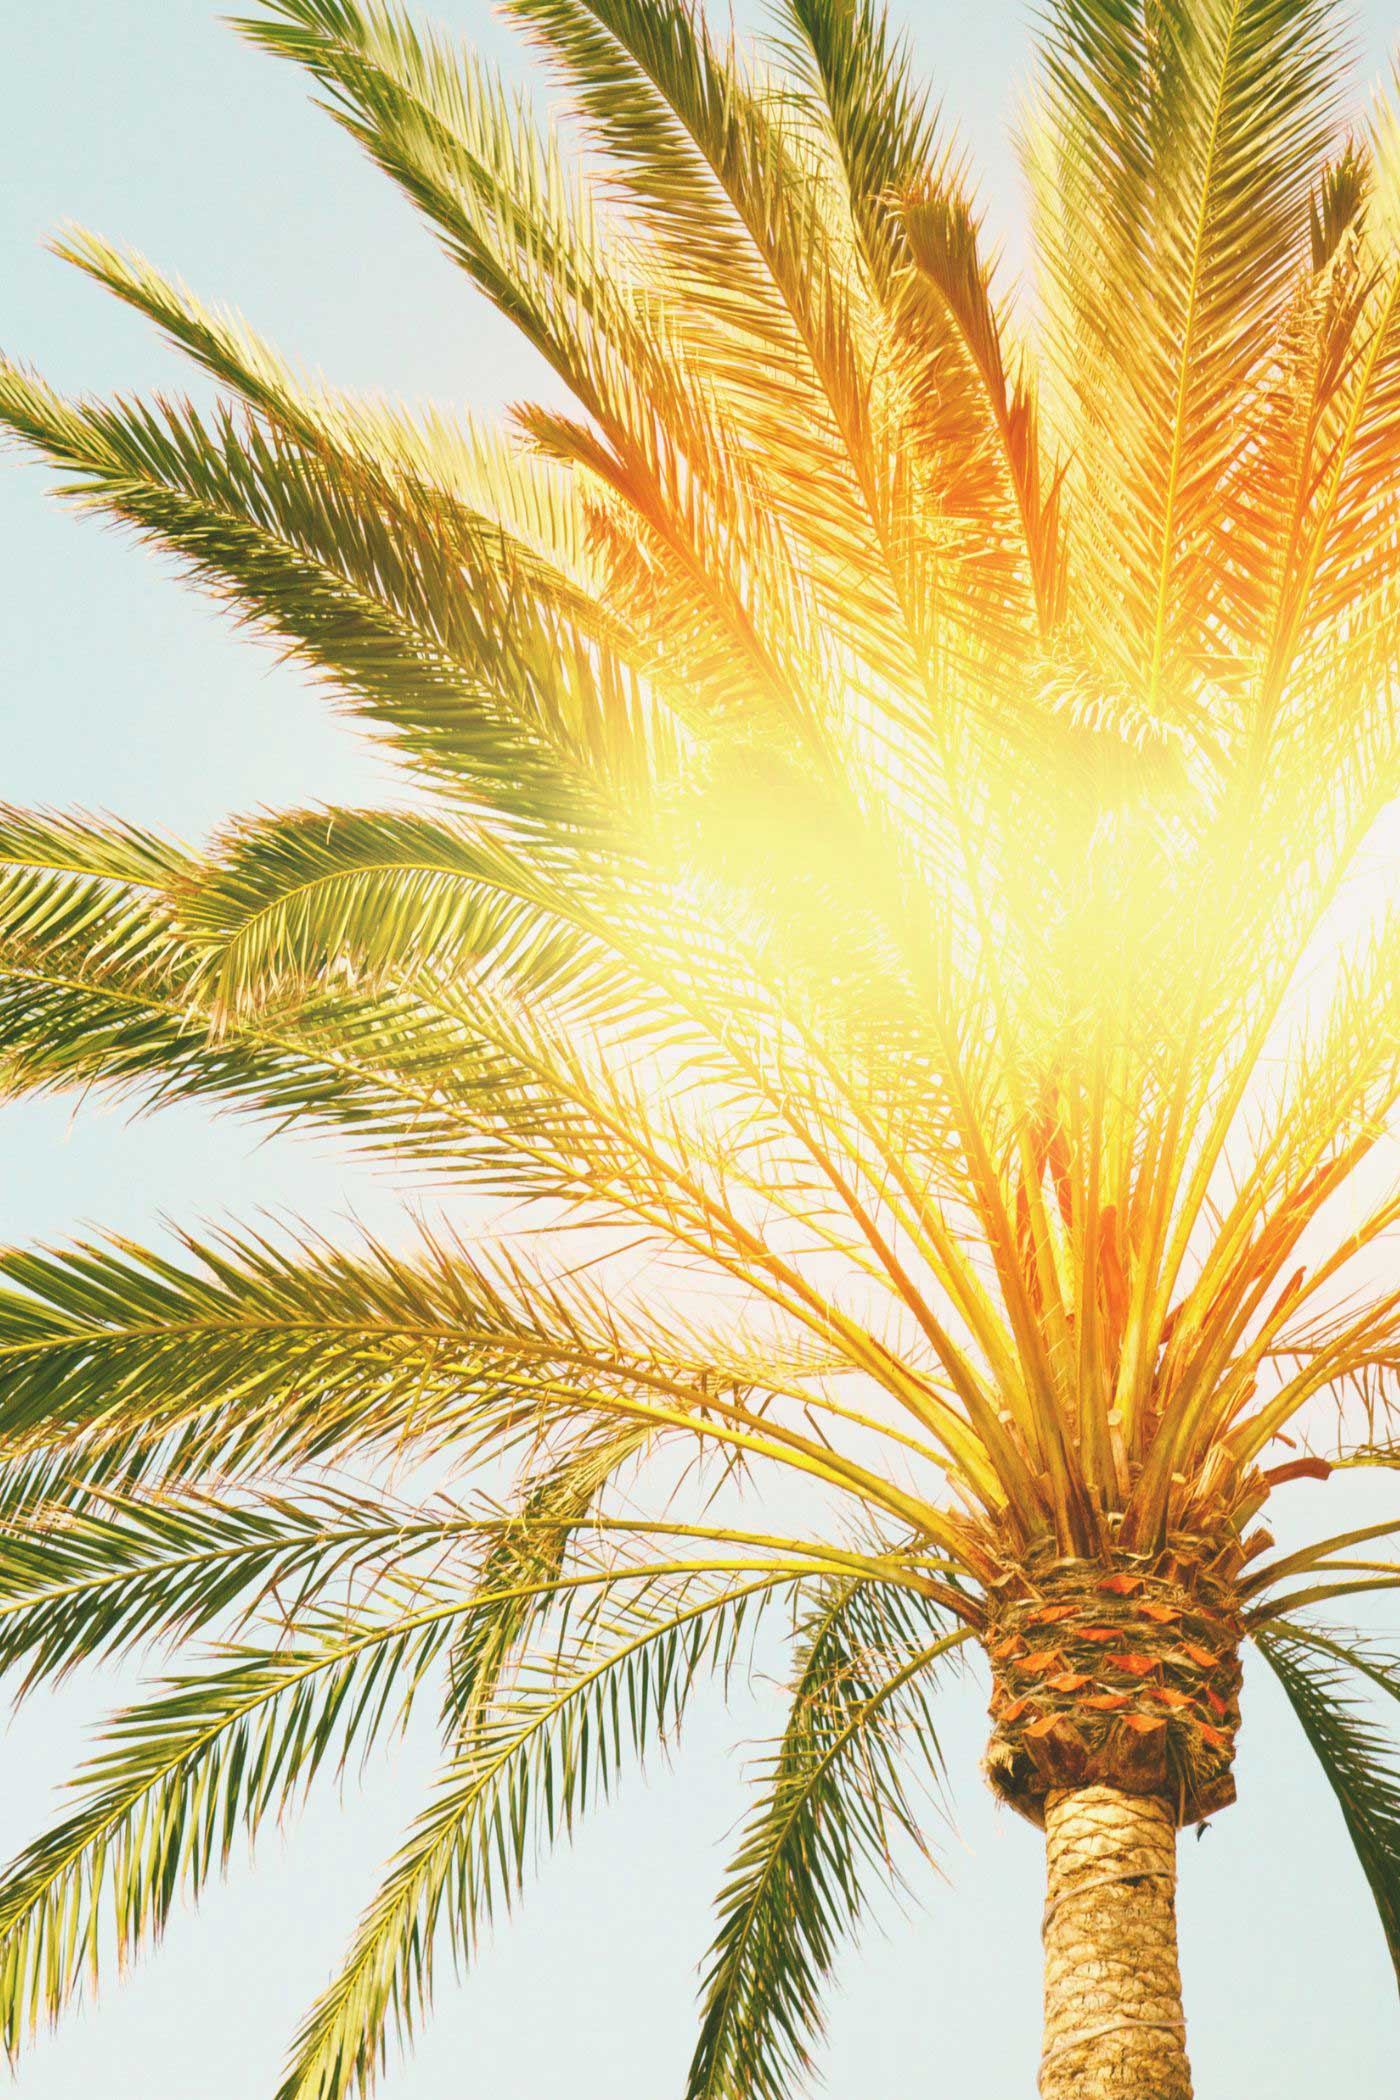 sun rays through a palm tree. gratitude activity 